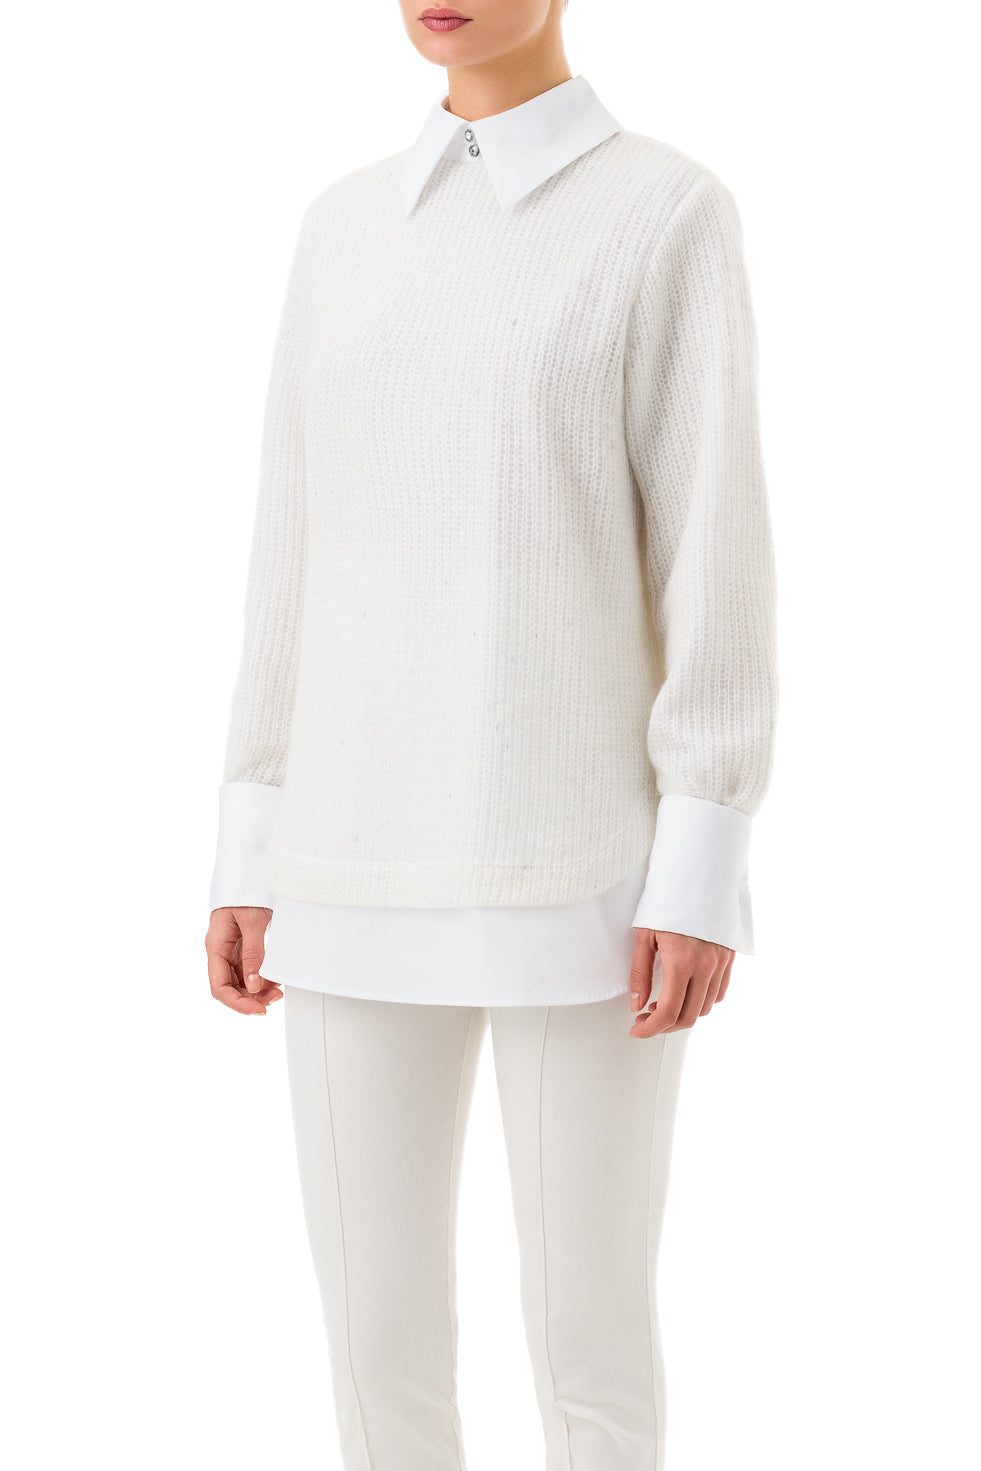 Maia White Knitted Shirt